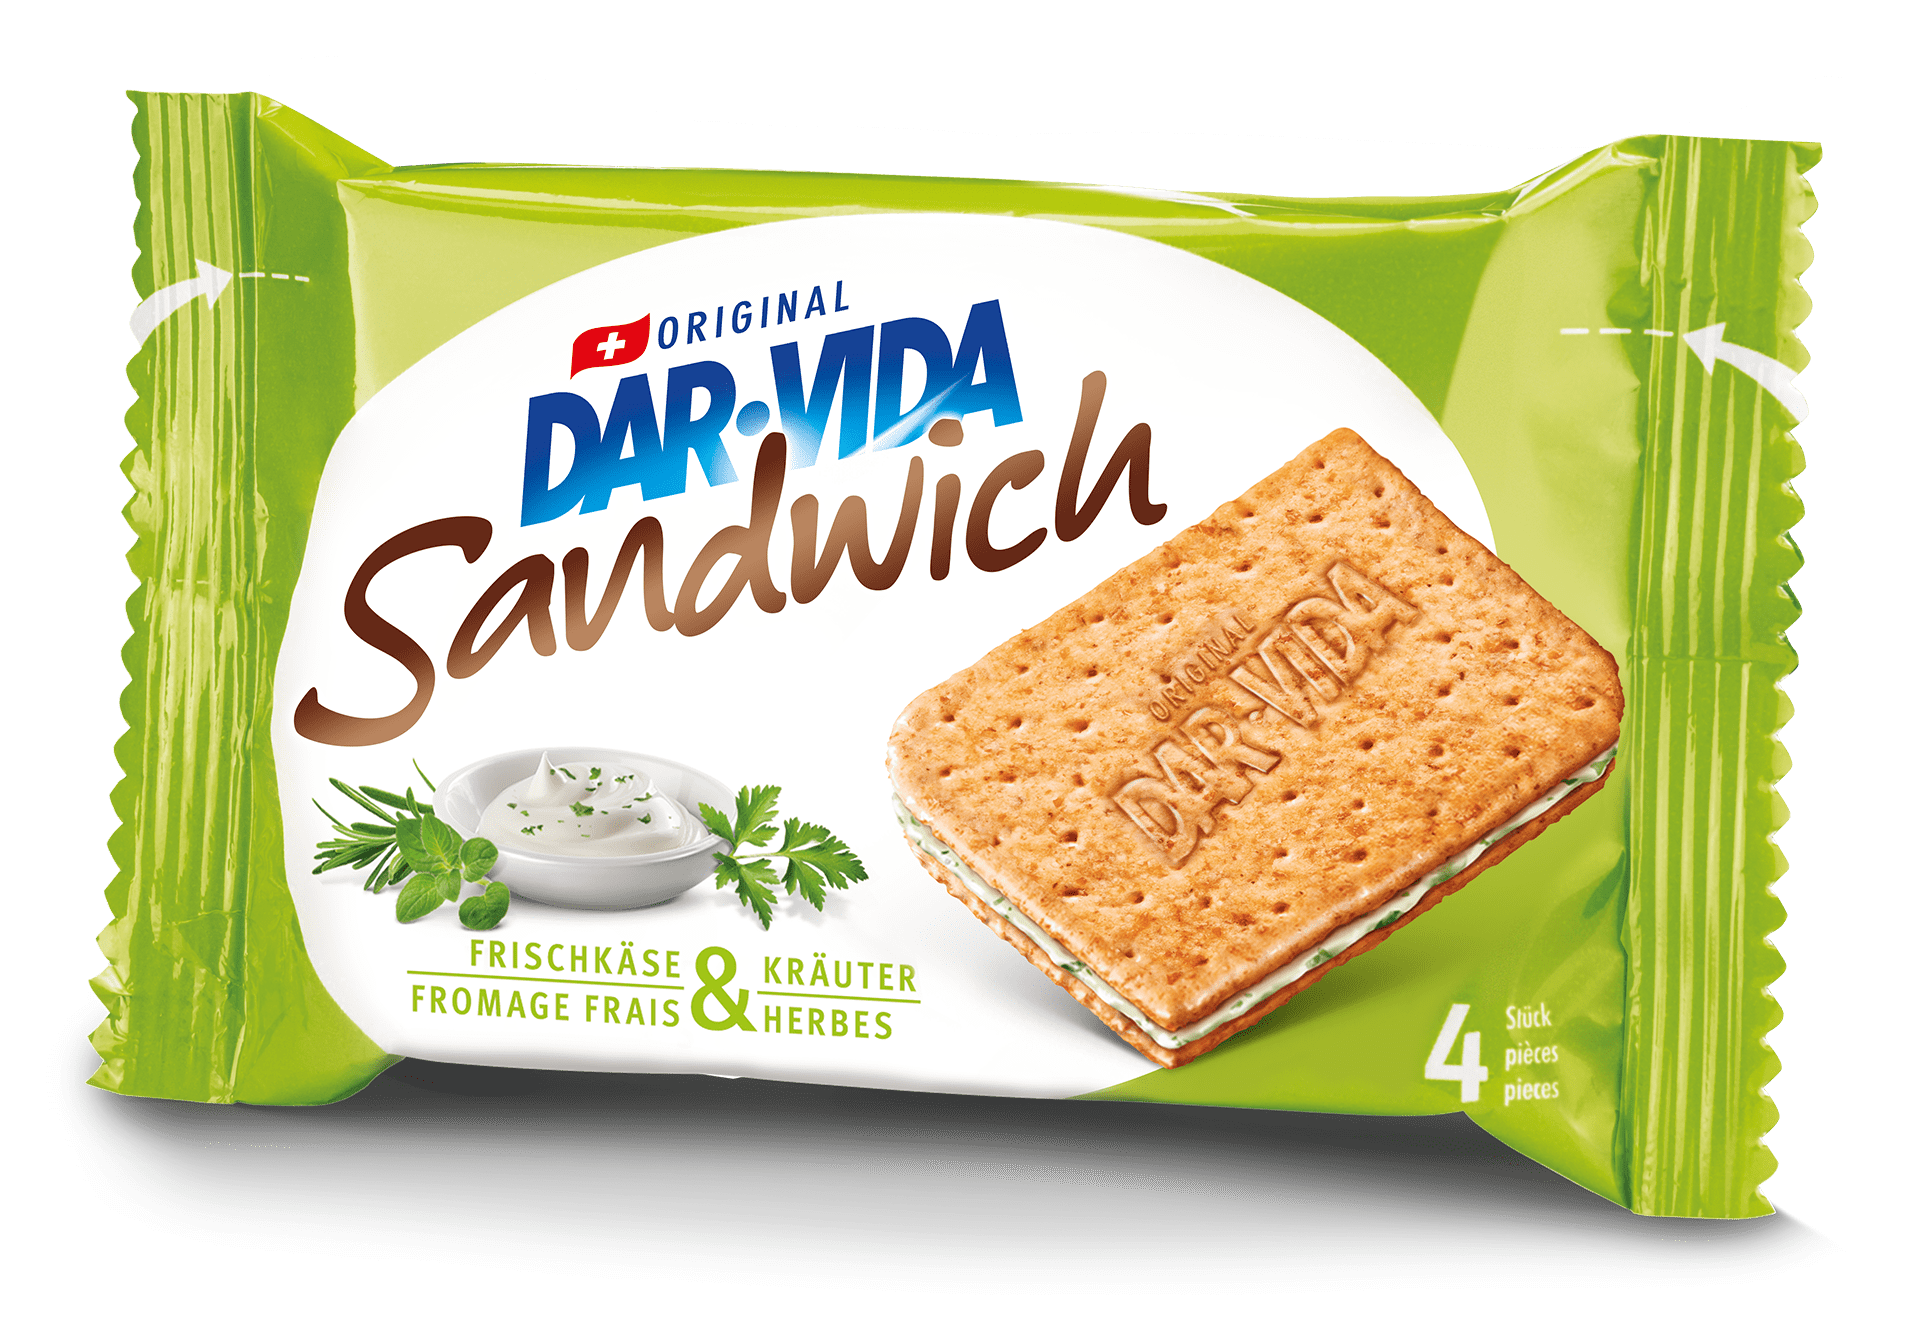 DAR-VIDA Sandwich Cream cheese & herbs